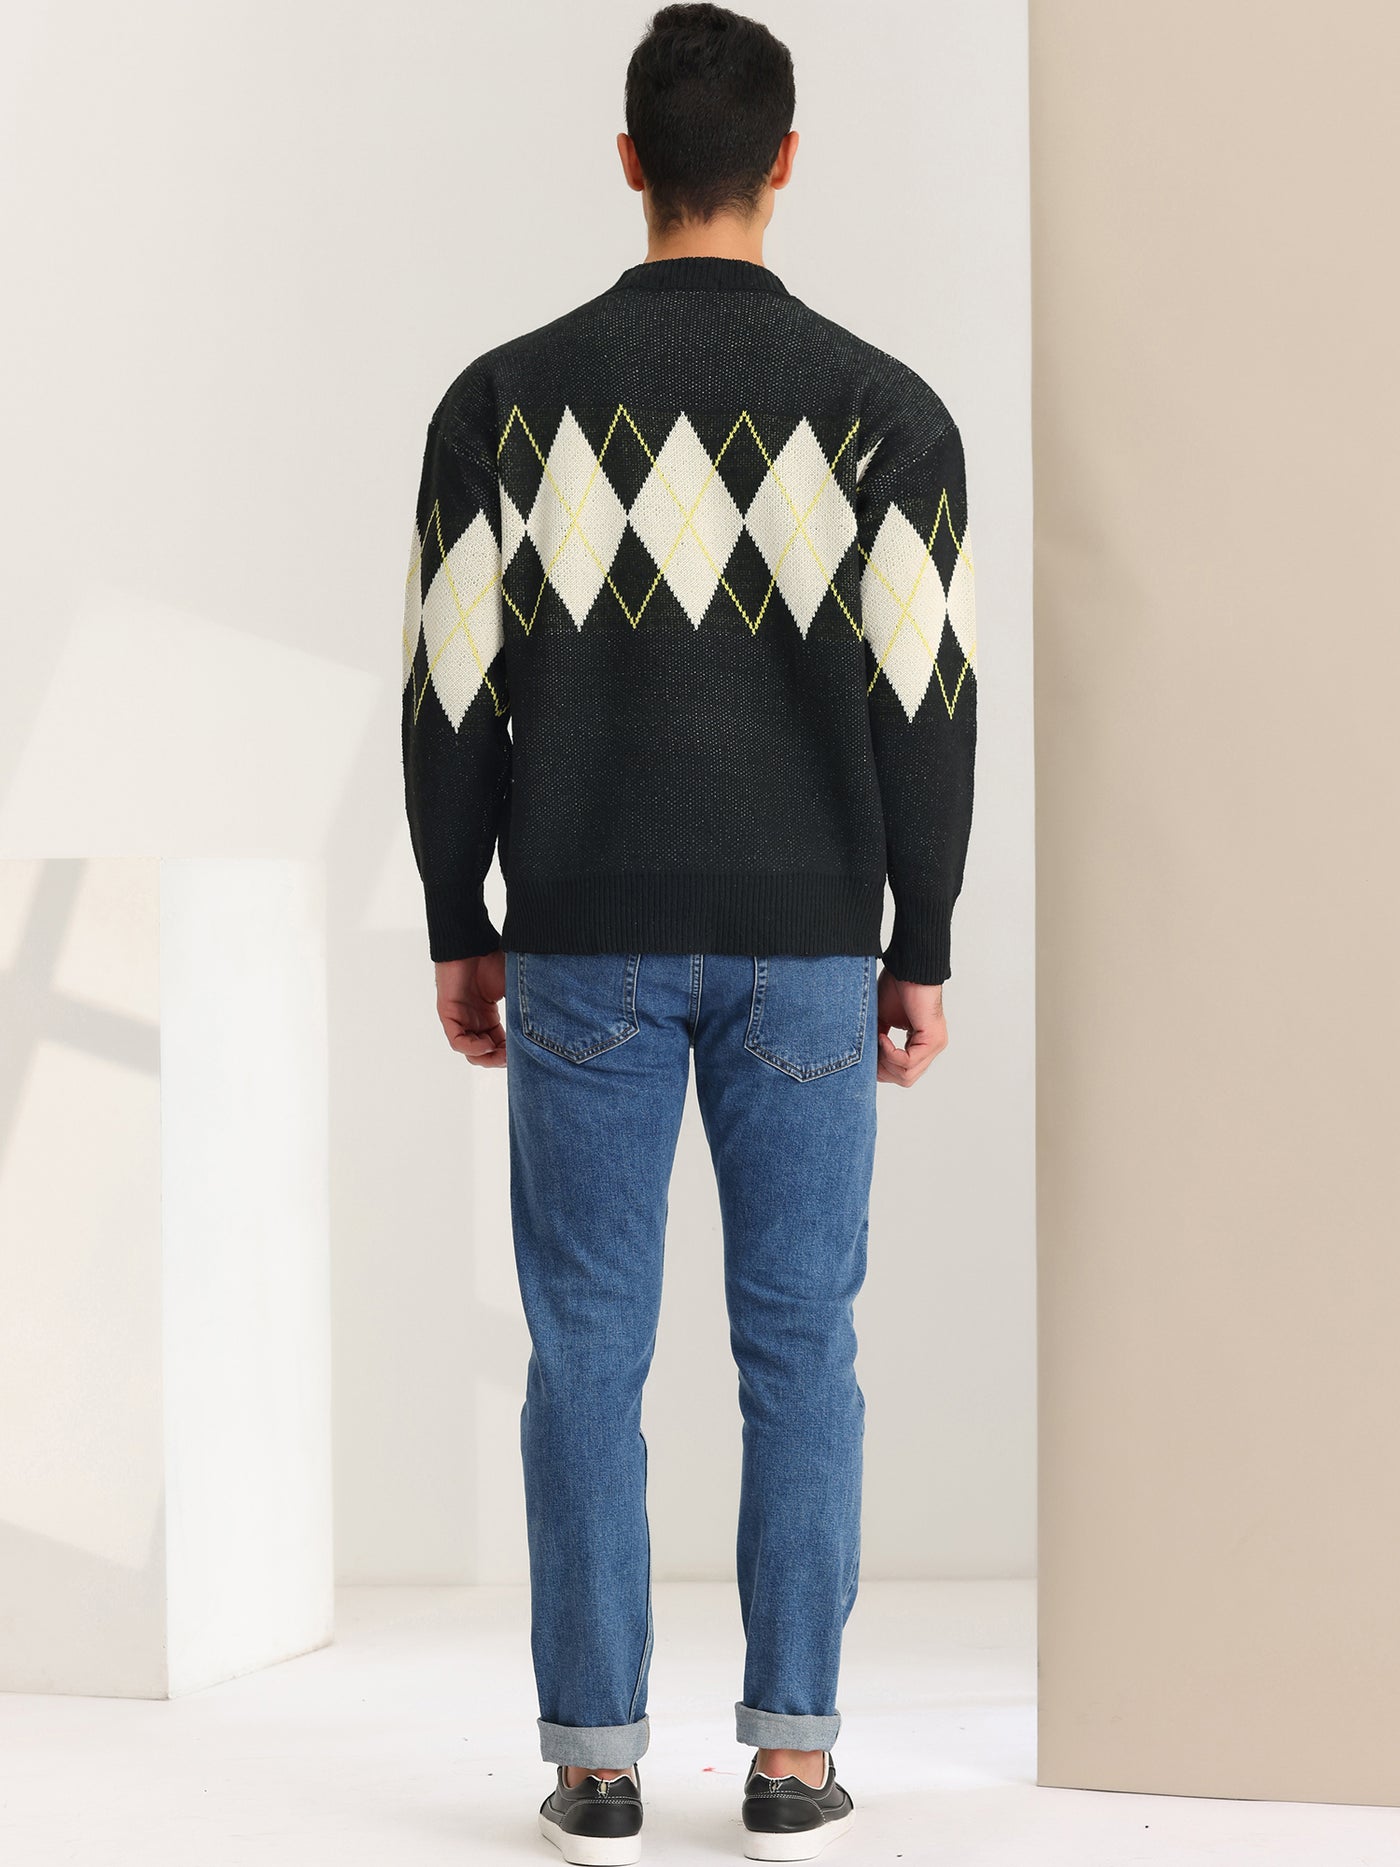 Bublédon Men's Argyle Sweater Long Sleeves Regular Fit Round Neck Contrast Color Knit Pullover